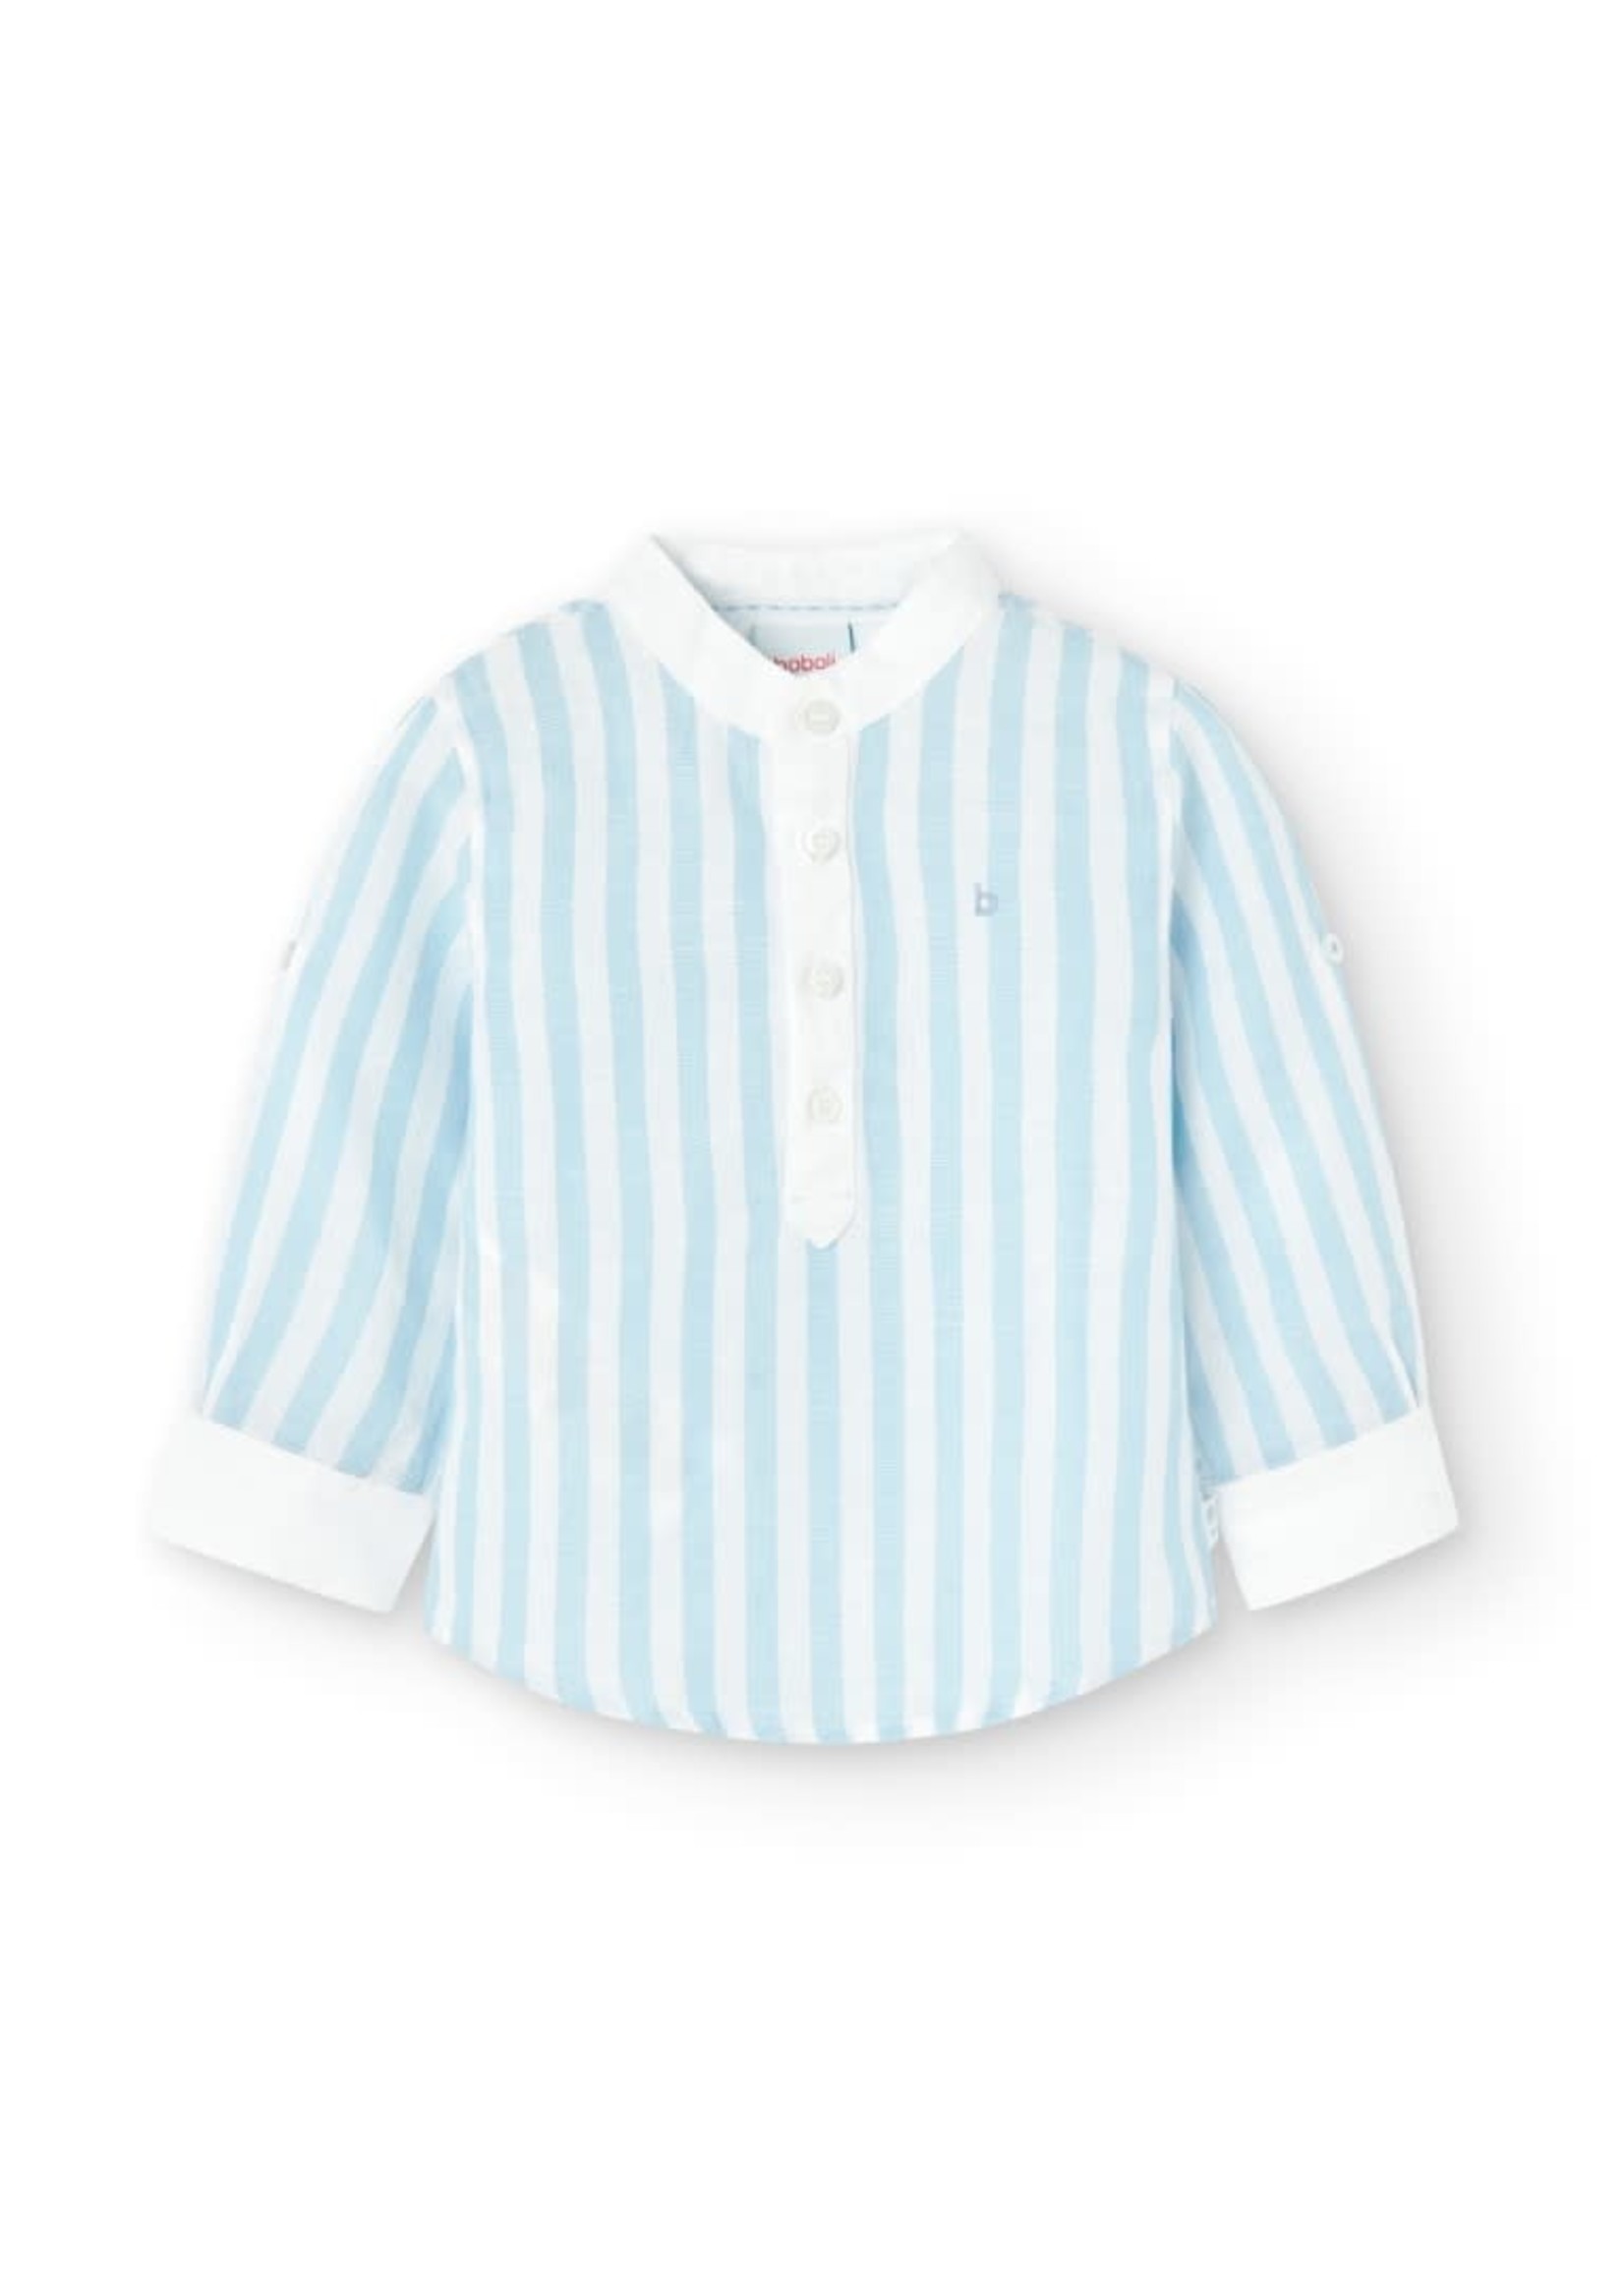 Boboli Boboli Linen shirt long sleeves striped for boy stripes 716015